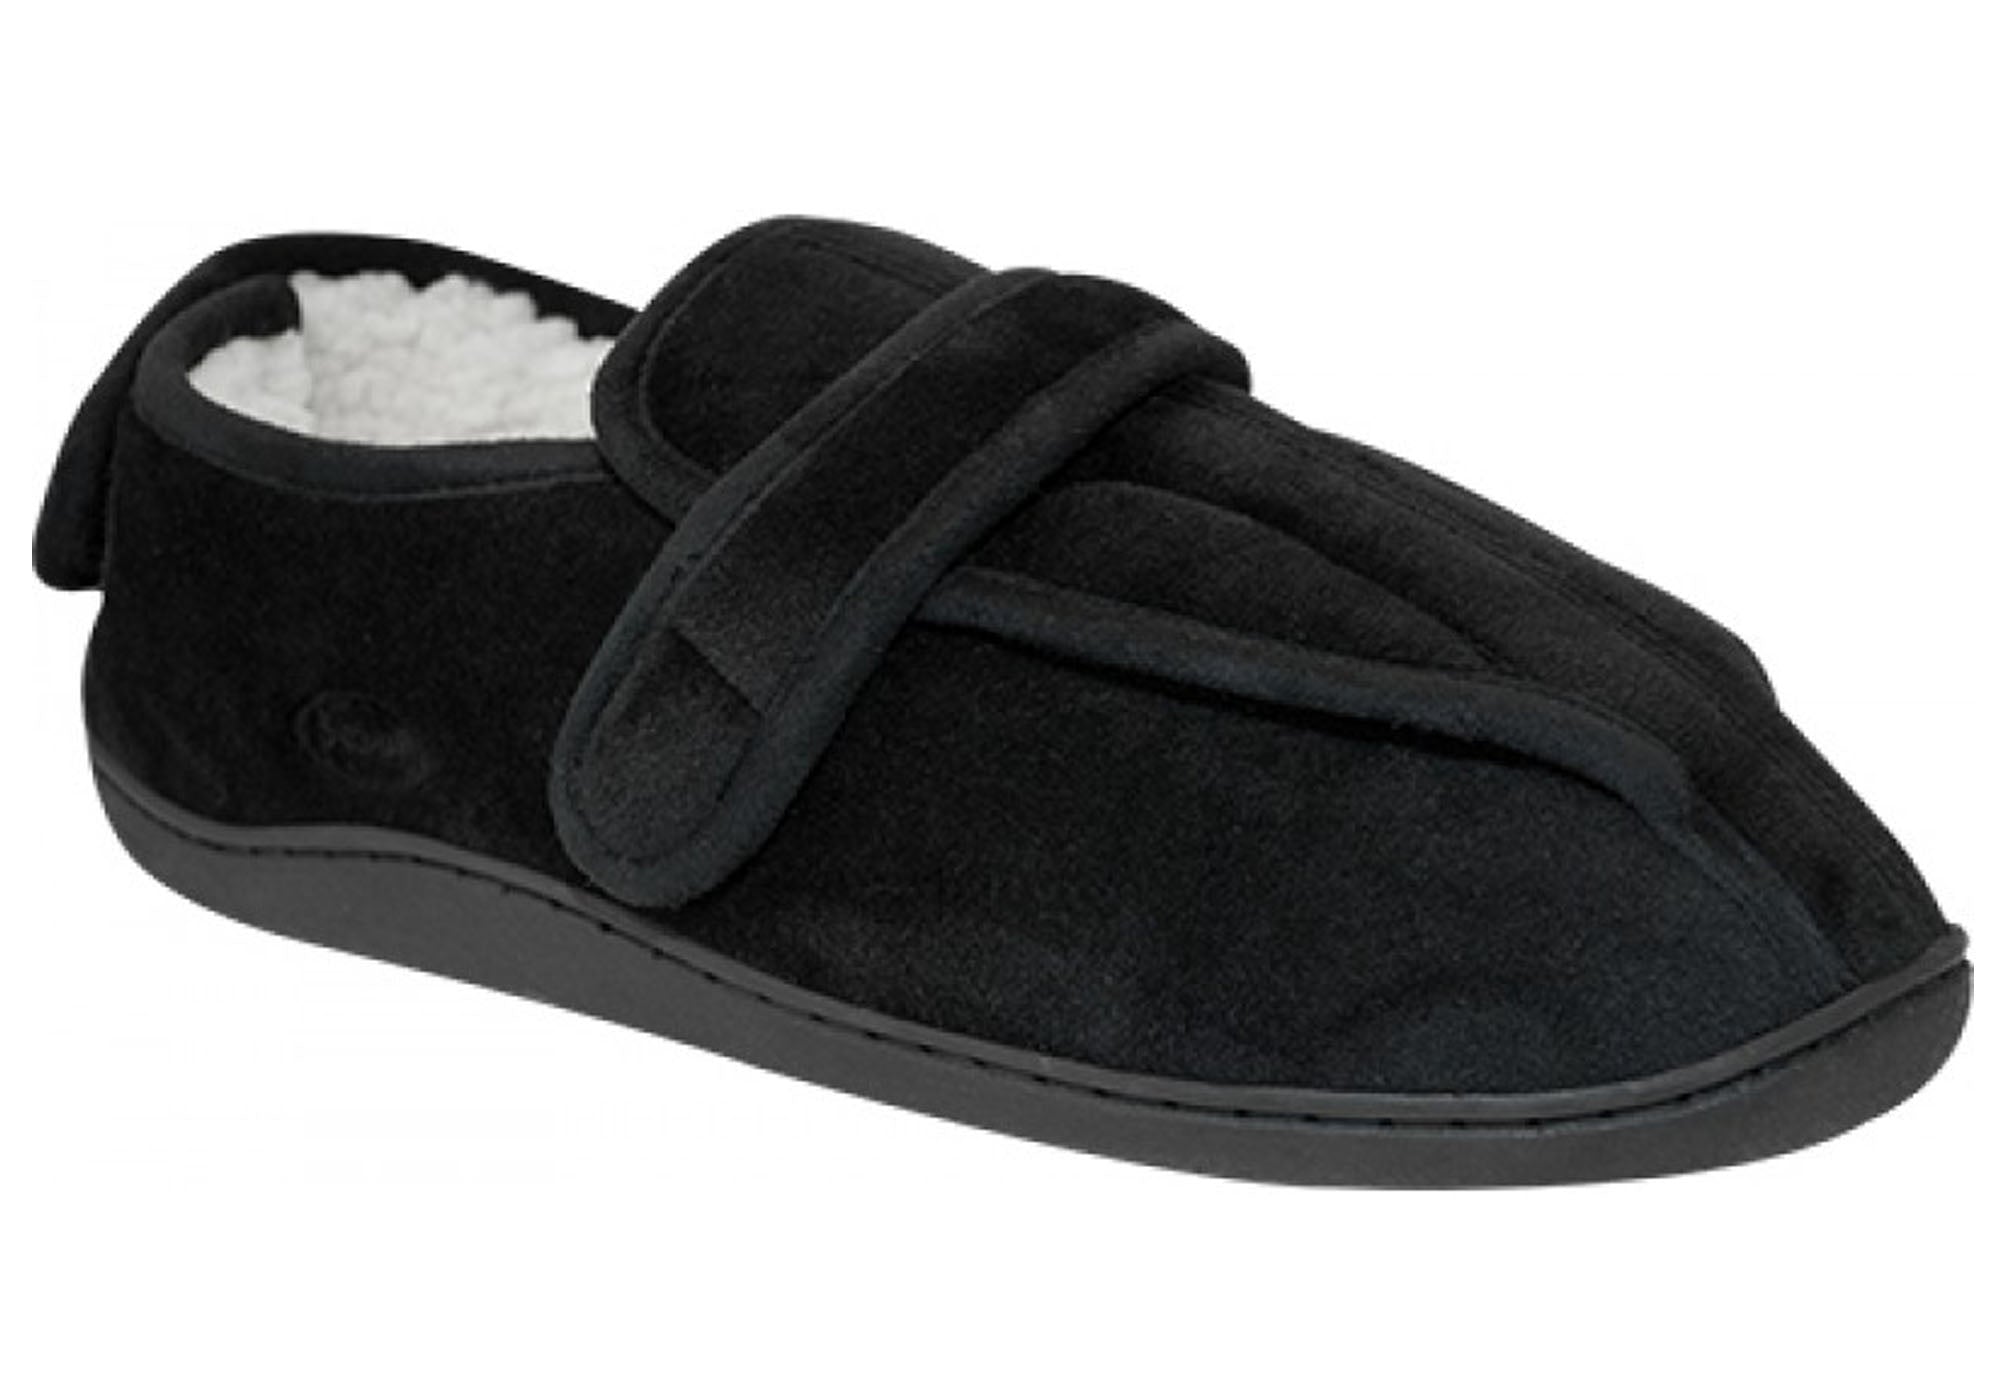 orthaheel slippers mens